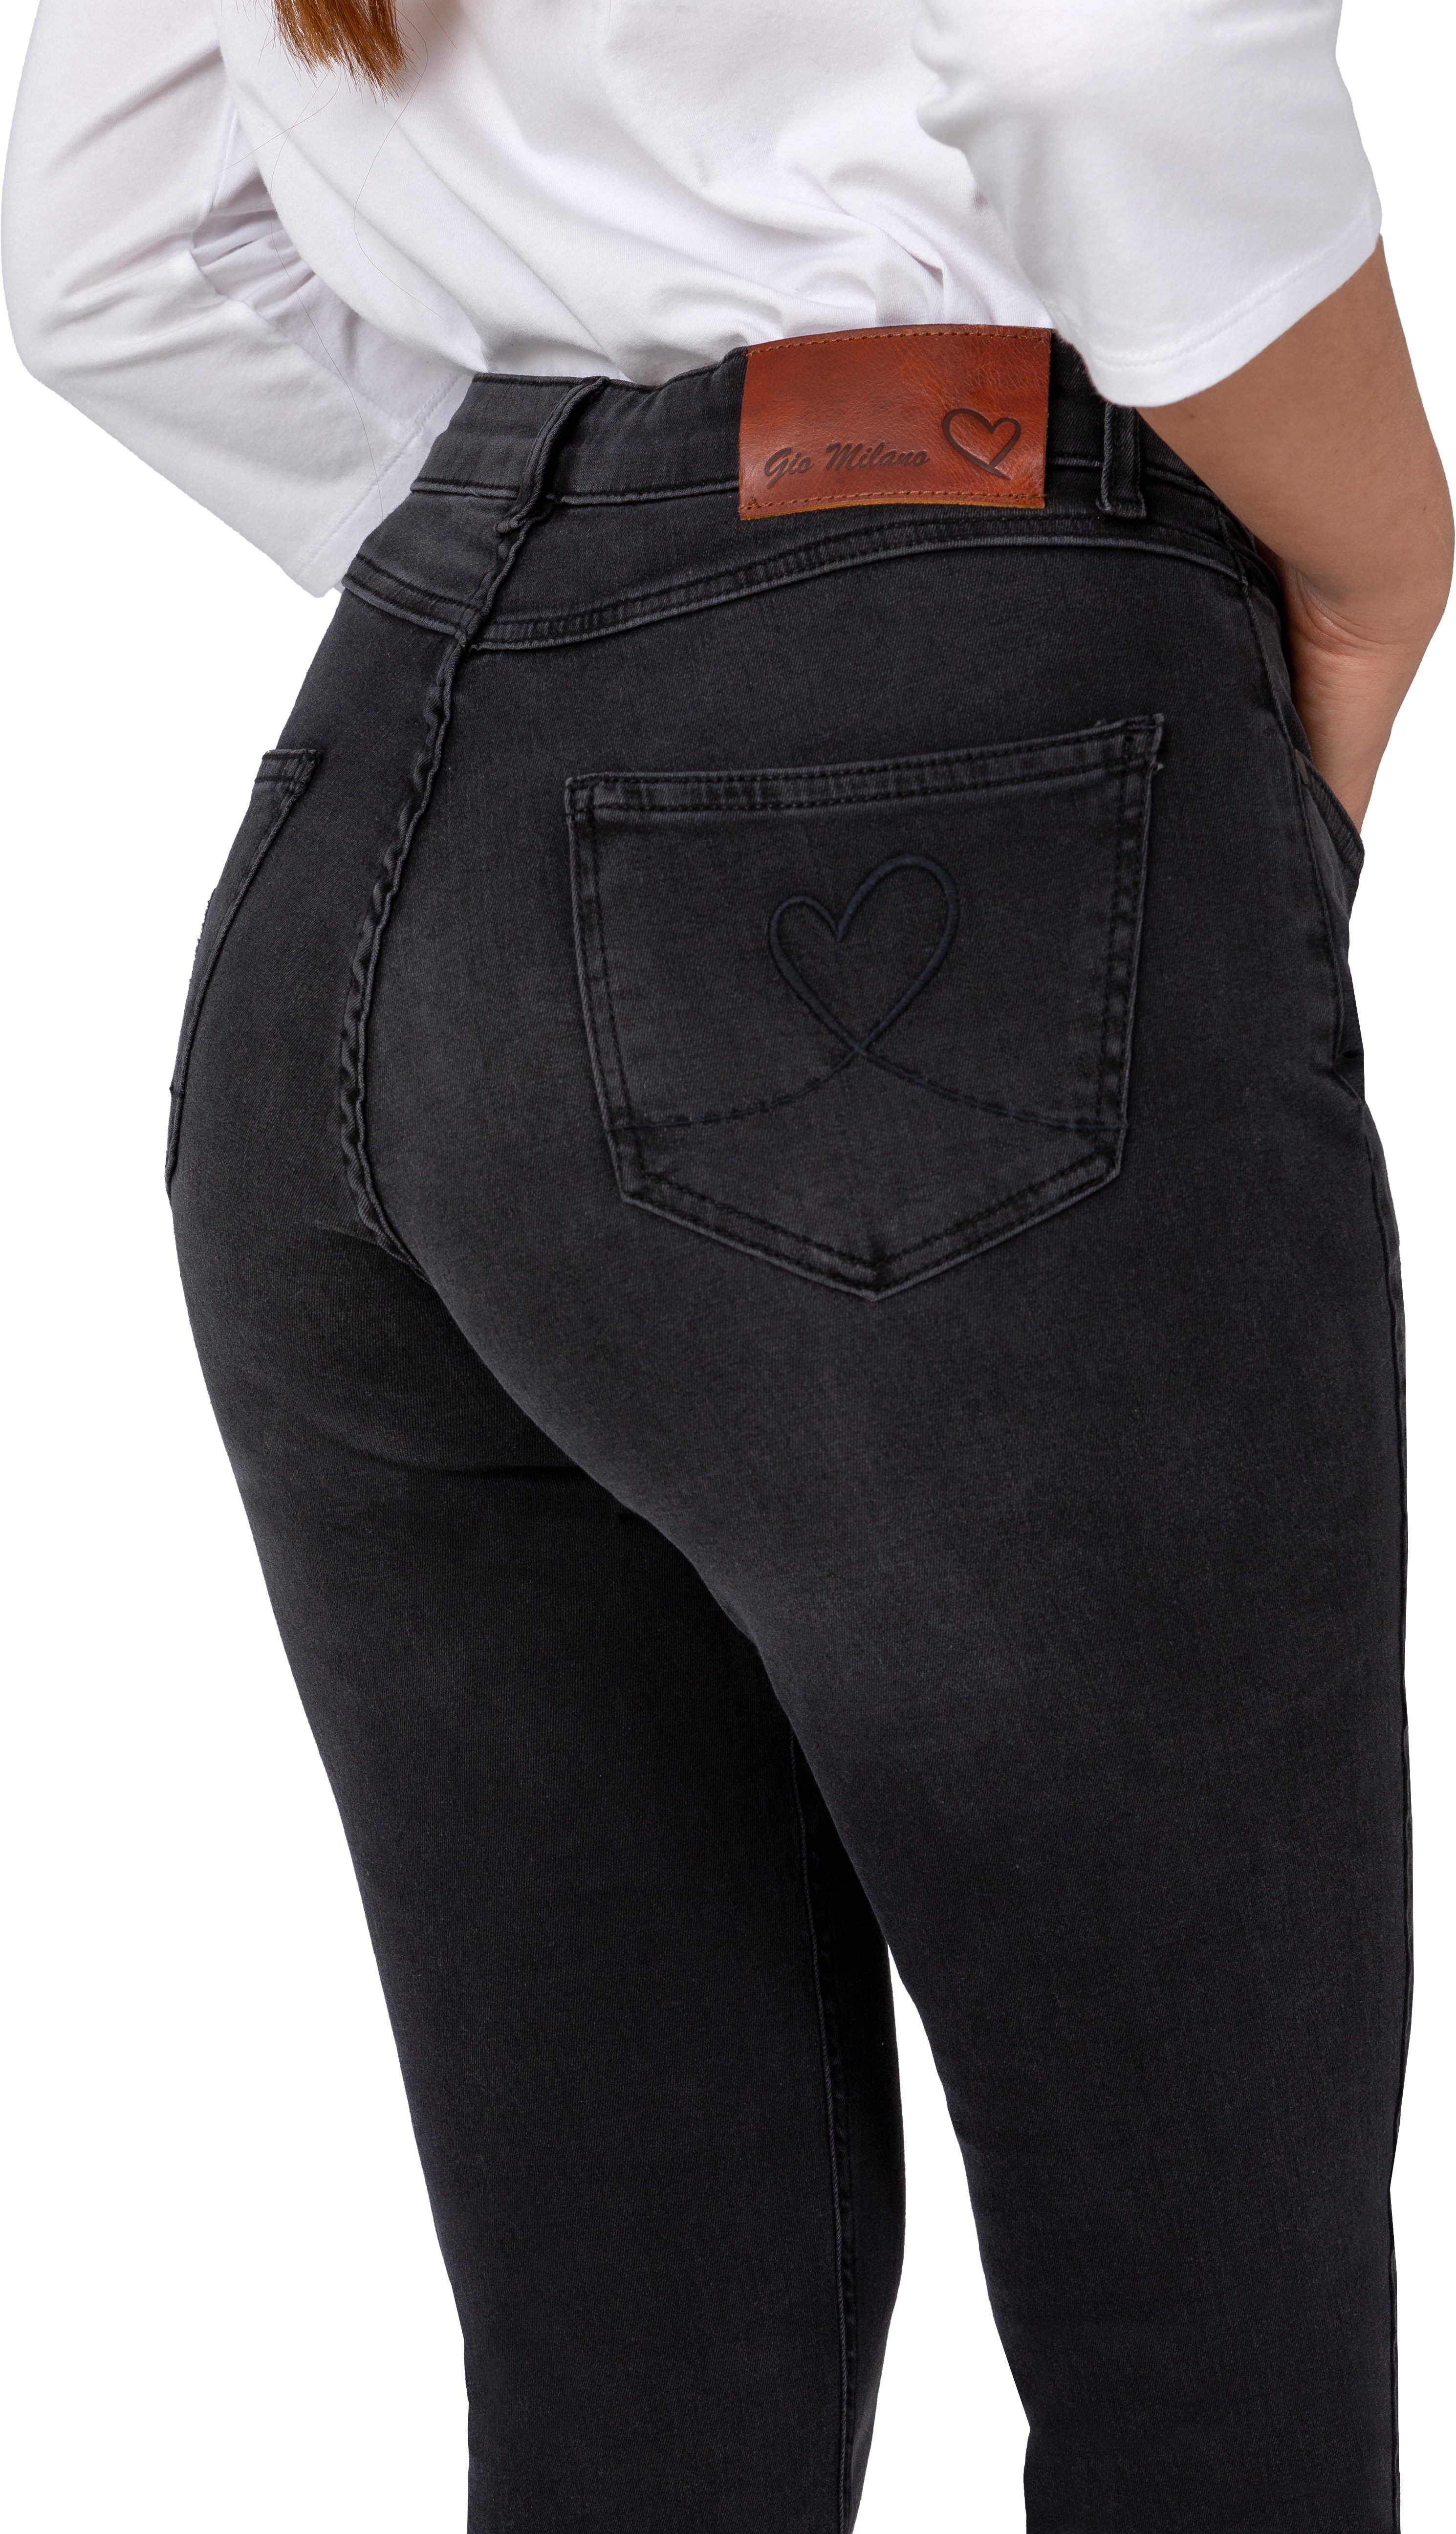 black 5-Pockets Stretch-Jeans Gio Milano washed Style Gio-Kim